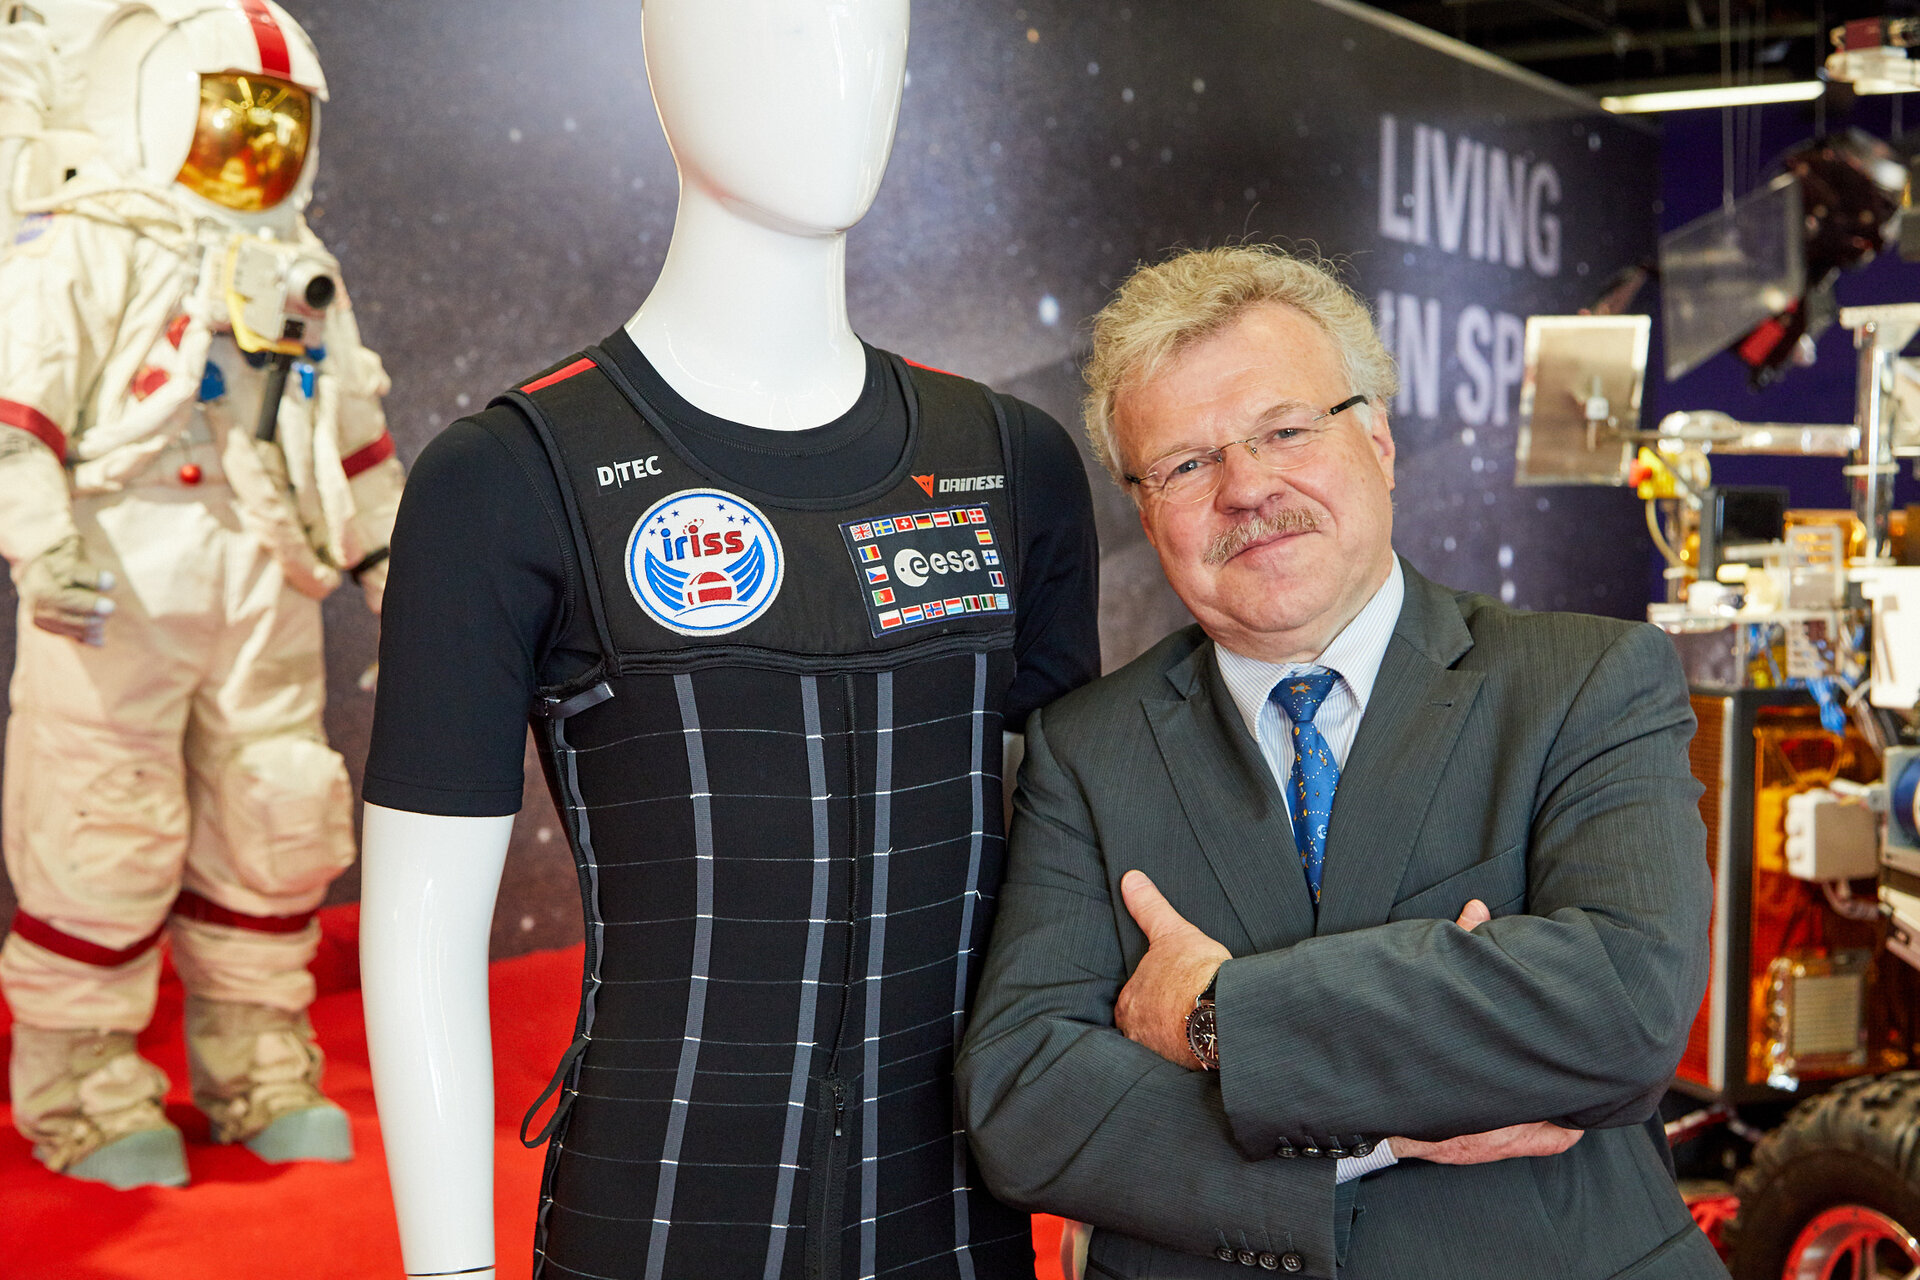 ESA astronaut Reinhold Ewald